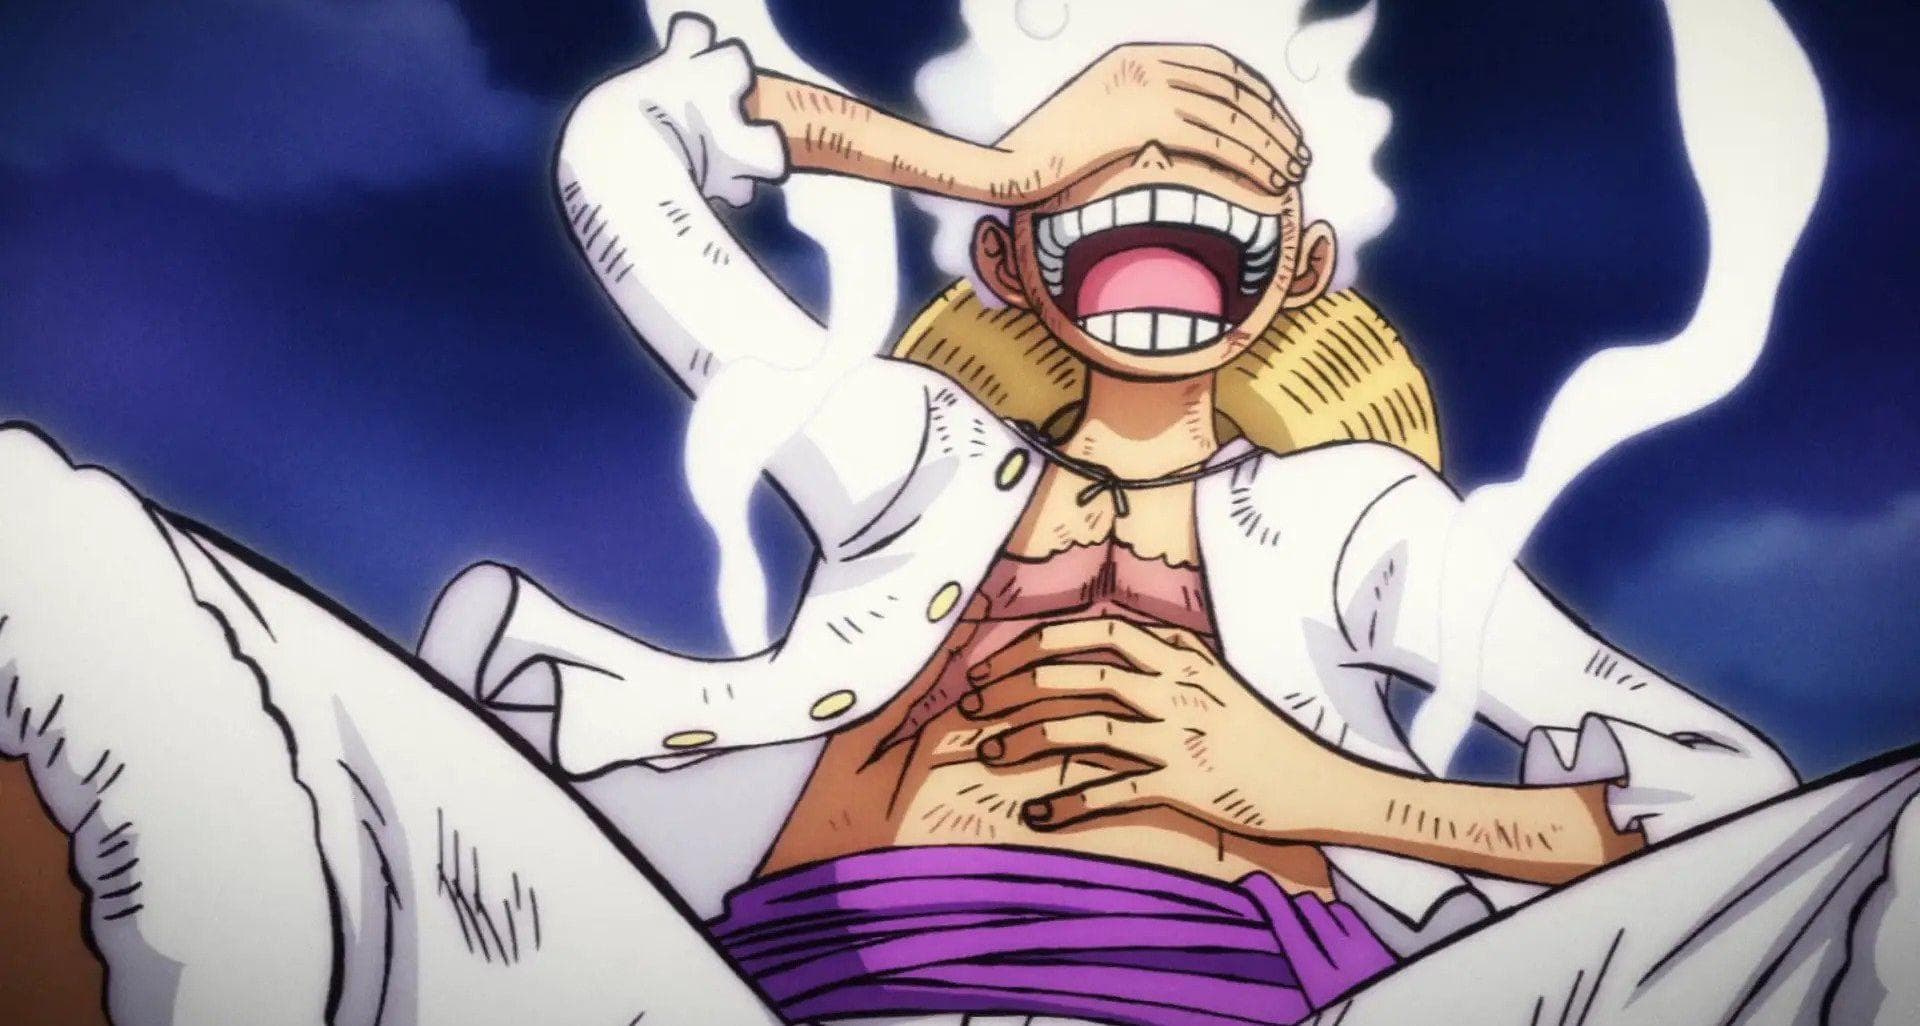 50 Best Episodes Of One Piece Ranked